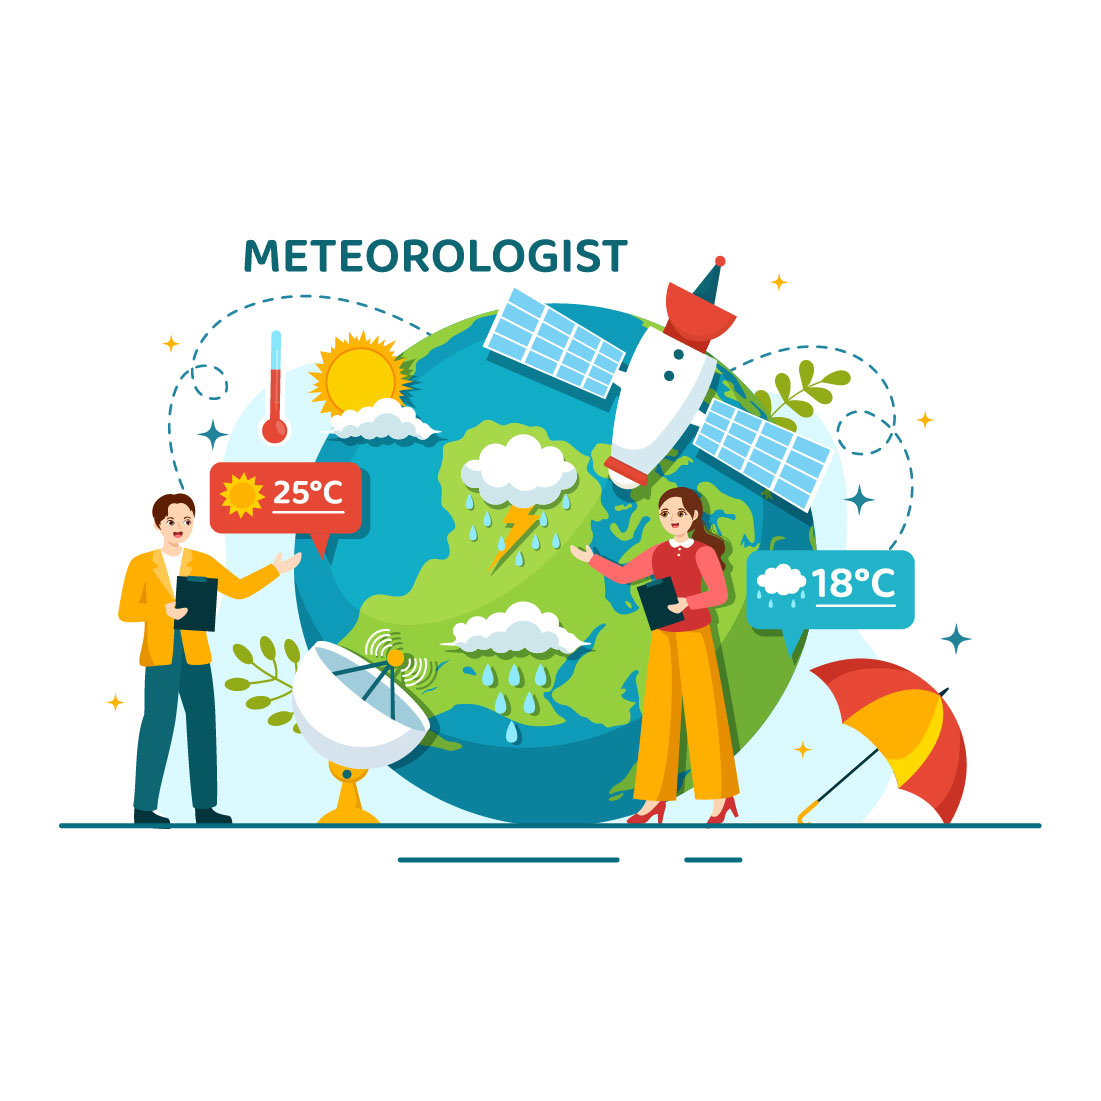 14 Meteorologist Vector Illustration preview image.